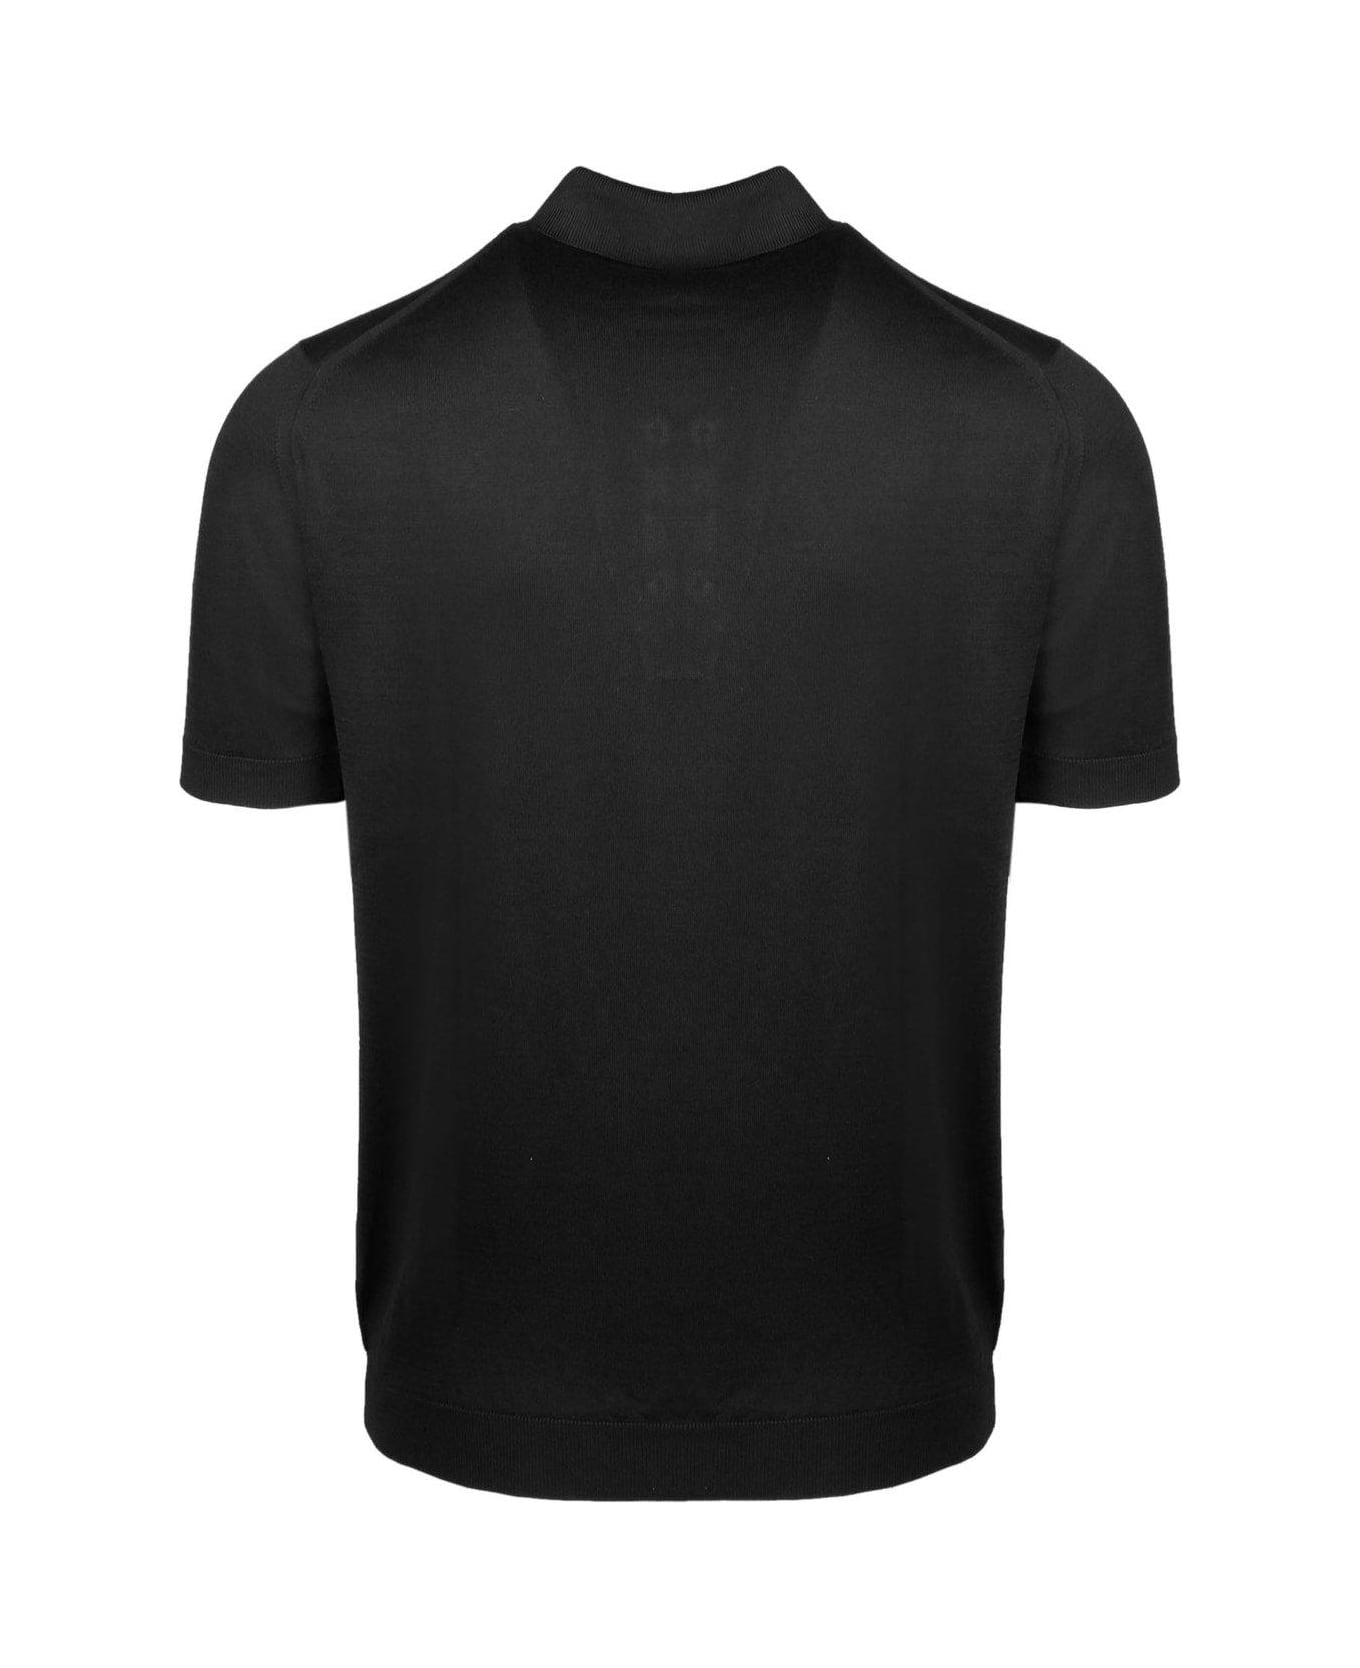 John Smedley Adrian Classic Polo Shirt - BLACK